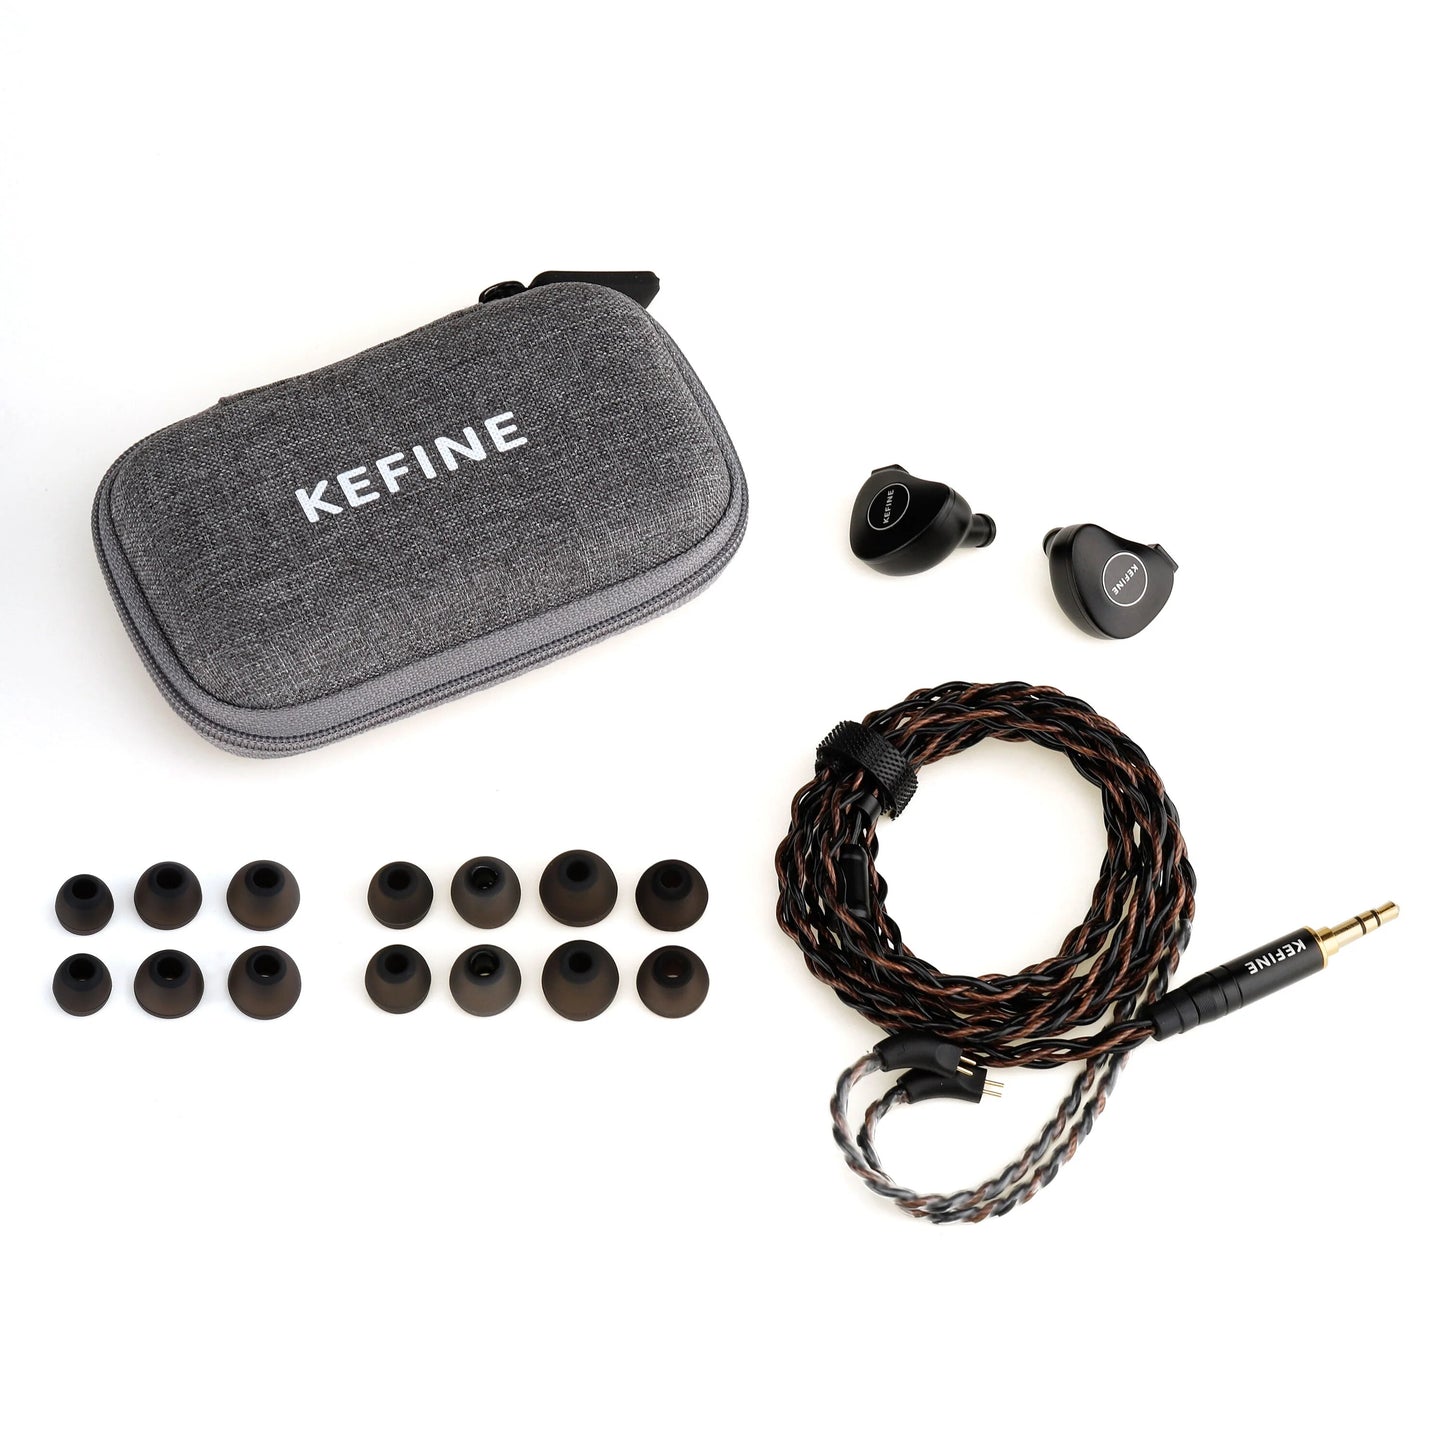 Kefine Klanar 14.5mm Planar Driver Hi-Fi Wired Earphone